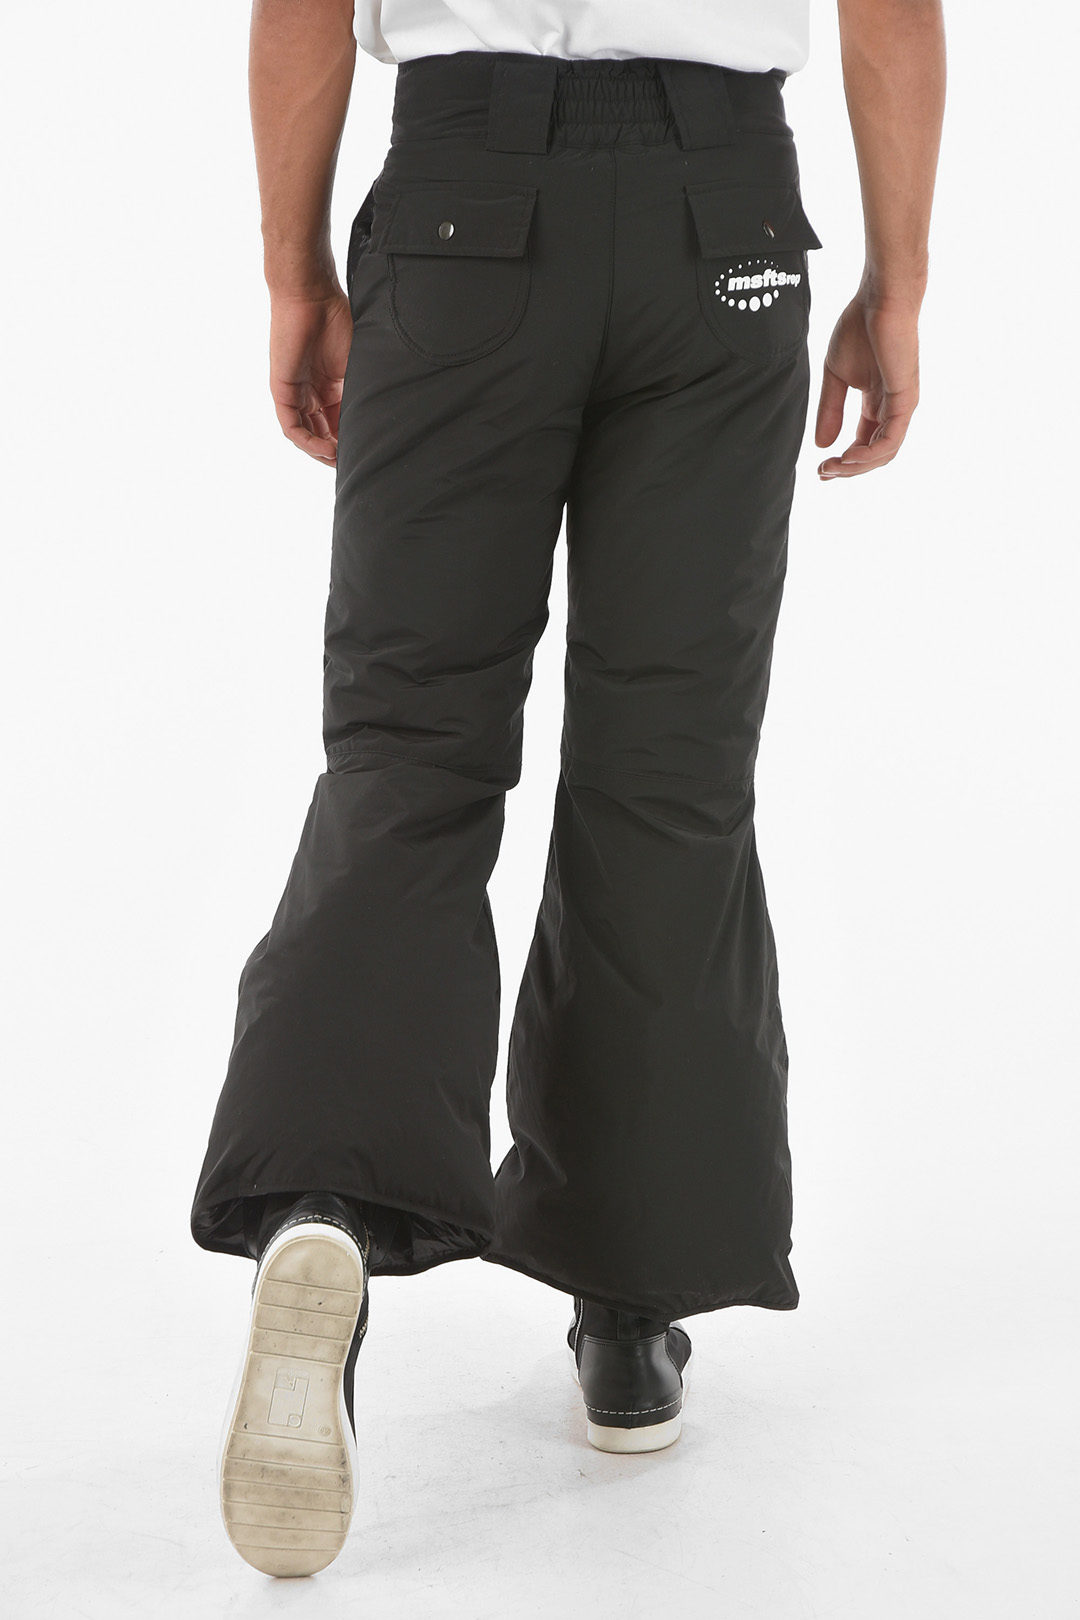 MSFTSrep Pantaloni da Neve Imbottiti a Tinta Unita con Logo a Contrasto  uomo - Glamood Outlet